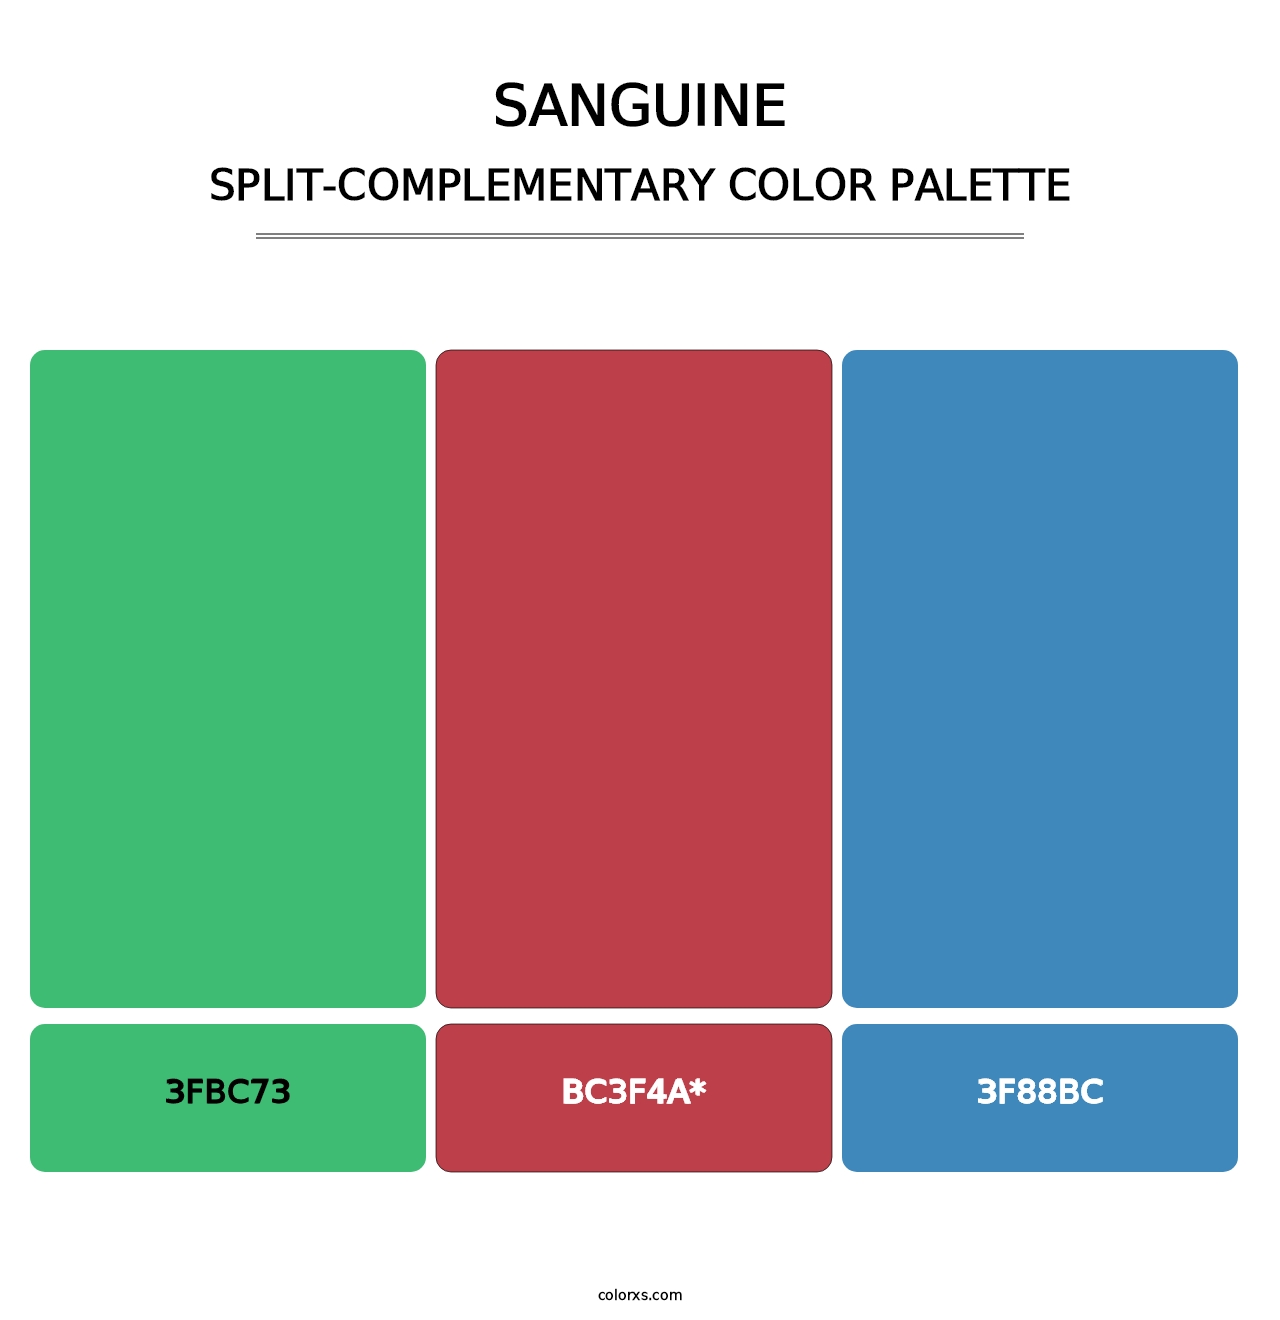 Sanguine - Split-Complementary Color Palette